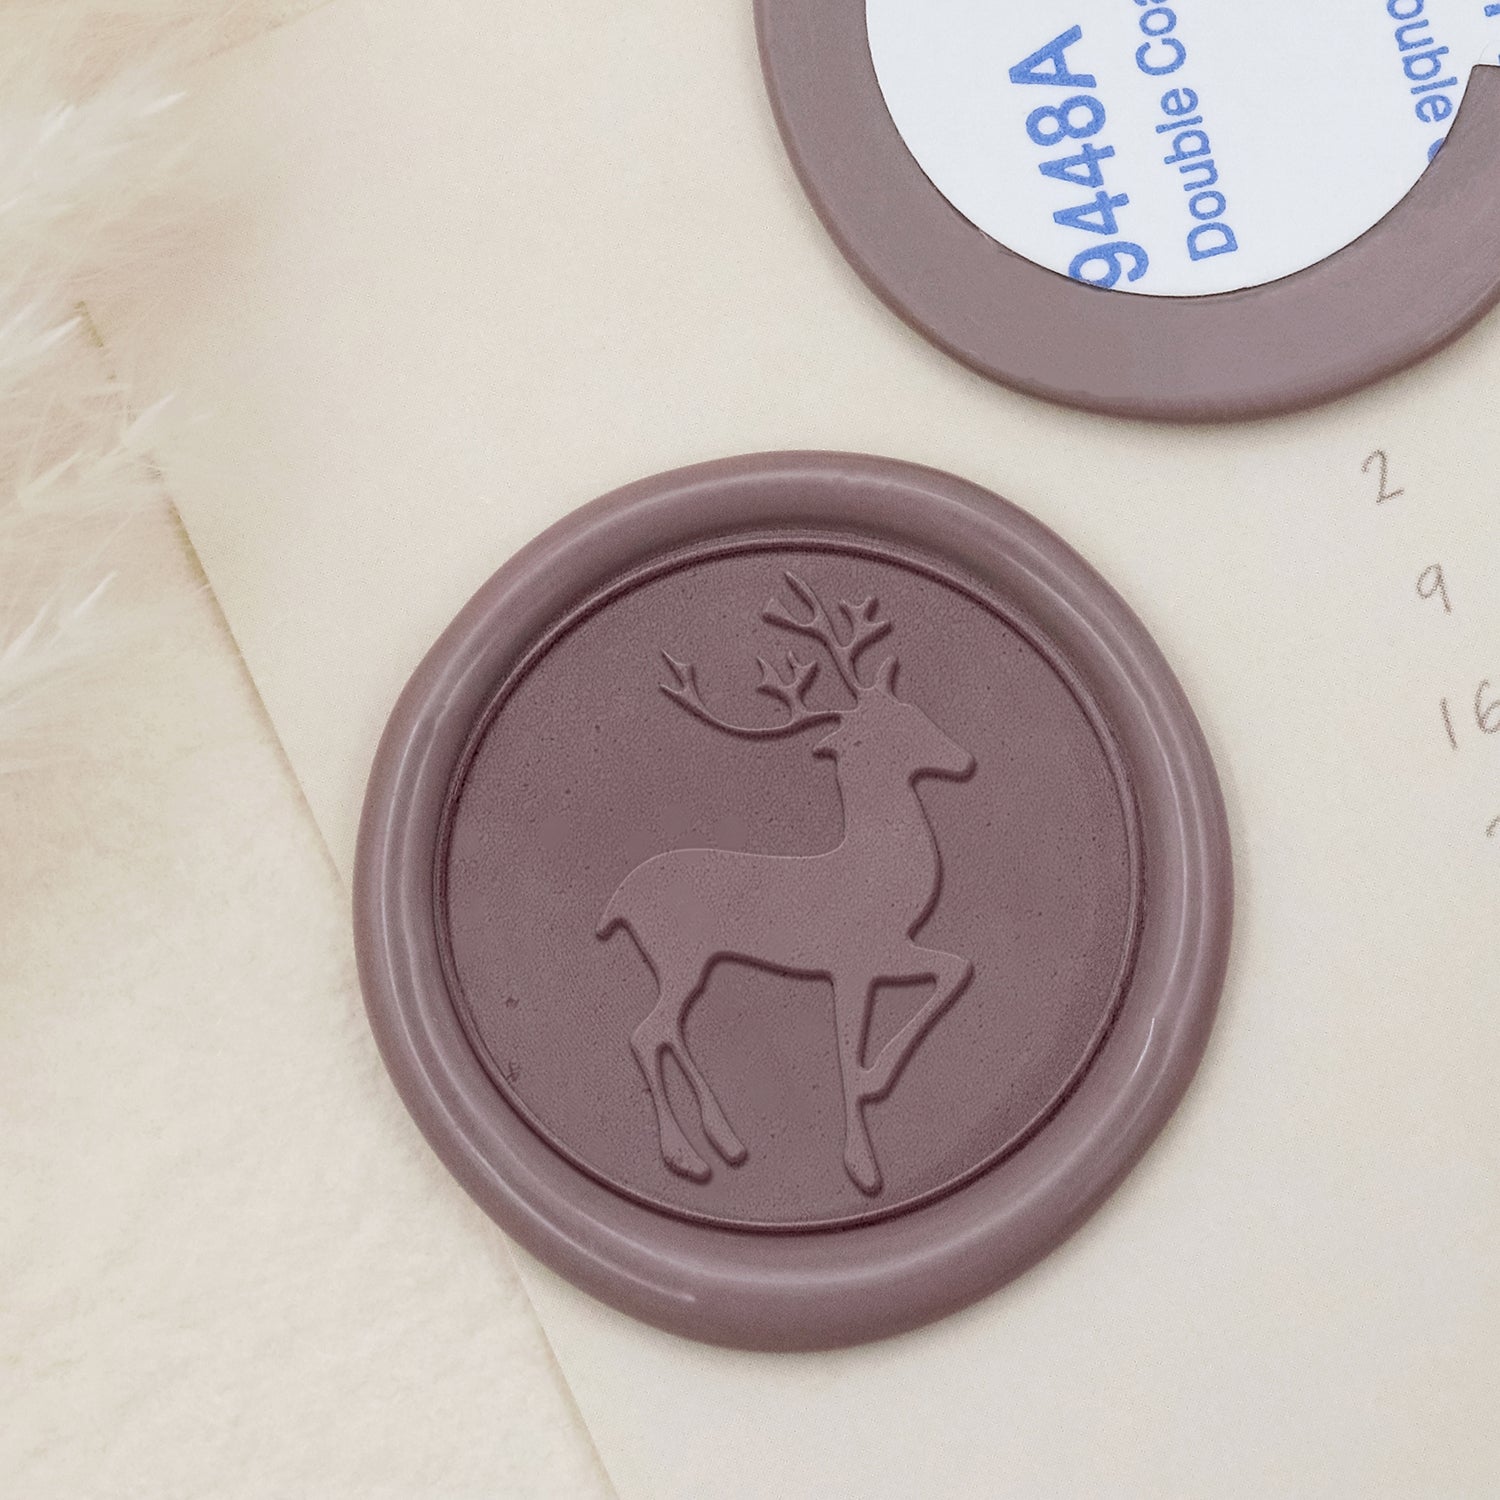 Stamprints ELK Self-adhesive Wax Seal Stickers - style 12-1